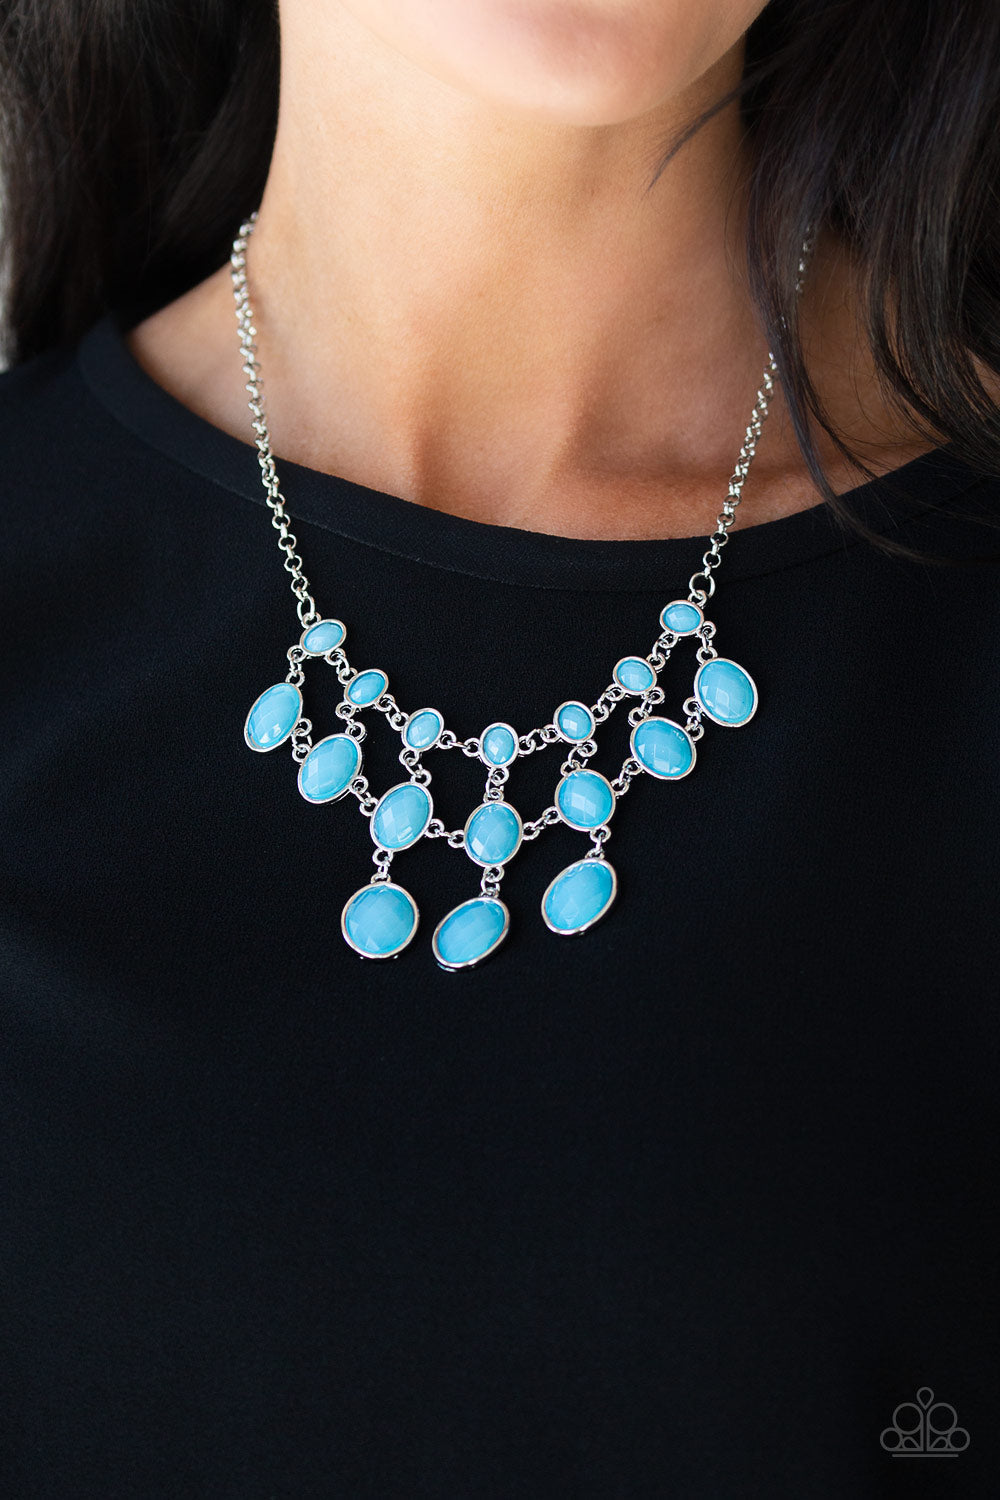 Paparazzi Mermaid Marmalade - Blue Gems - Necklace & Earrings - $5 Jewelry with Ashley Swint